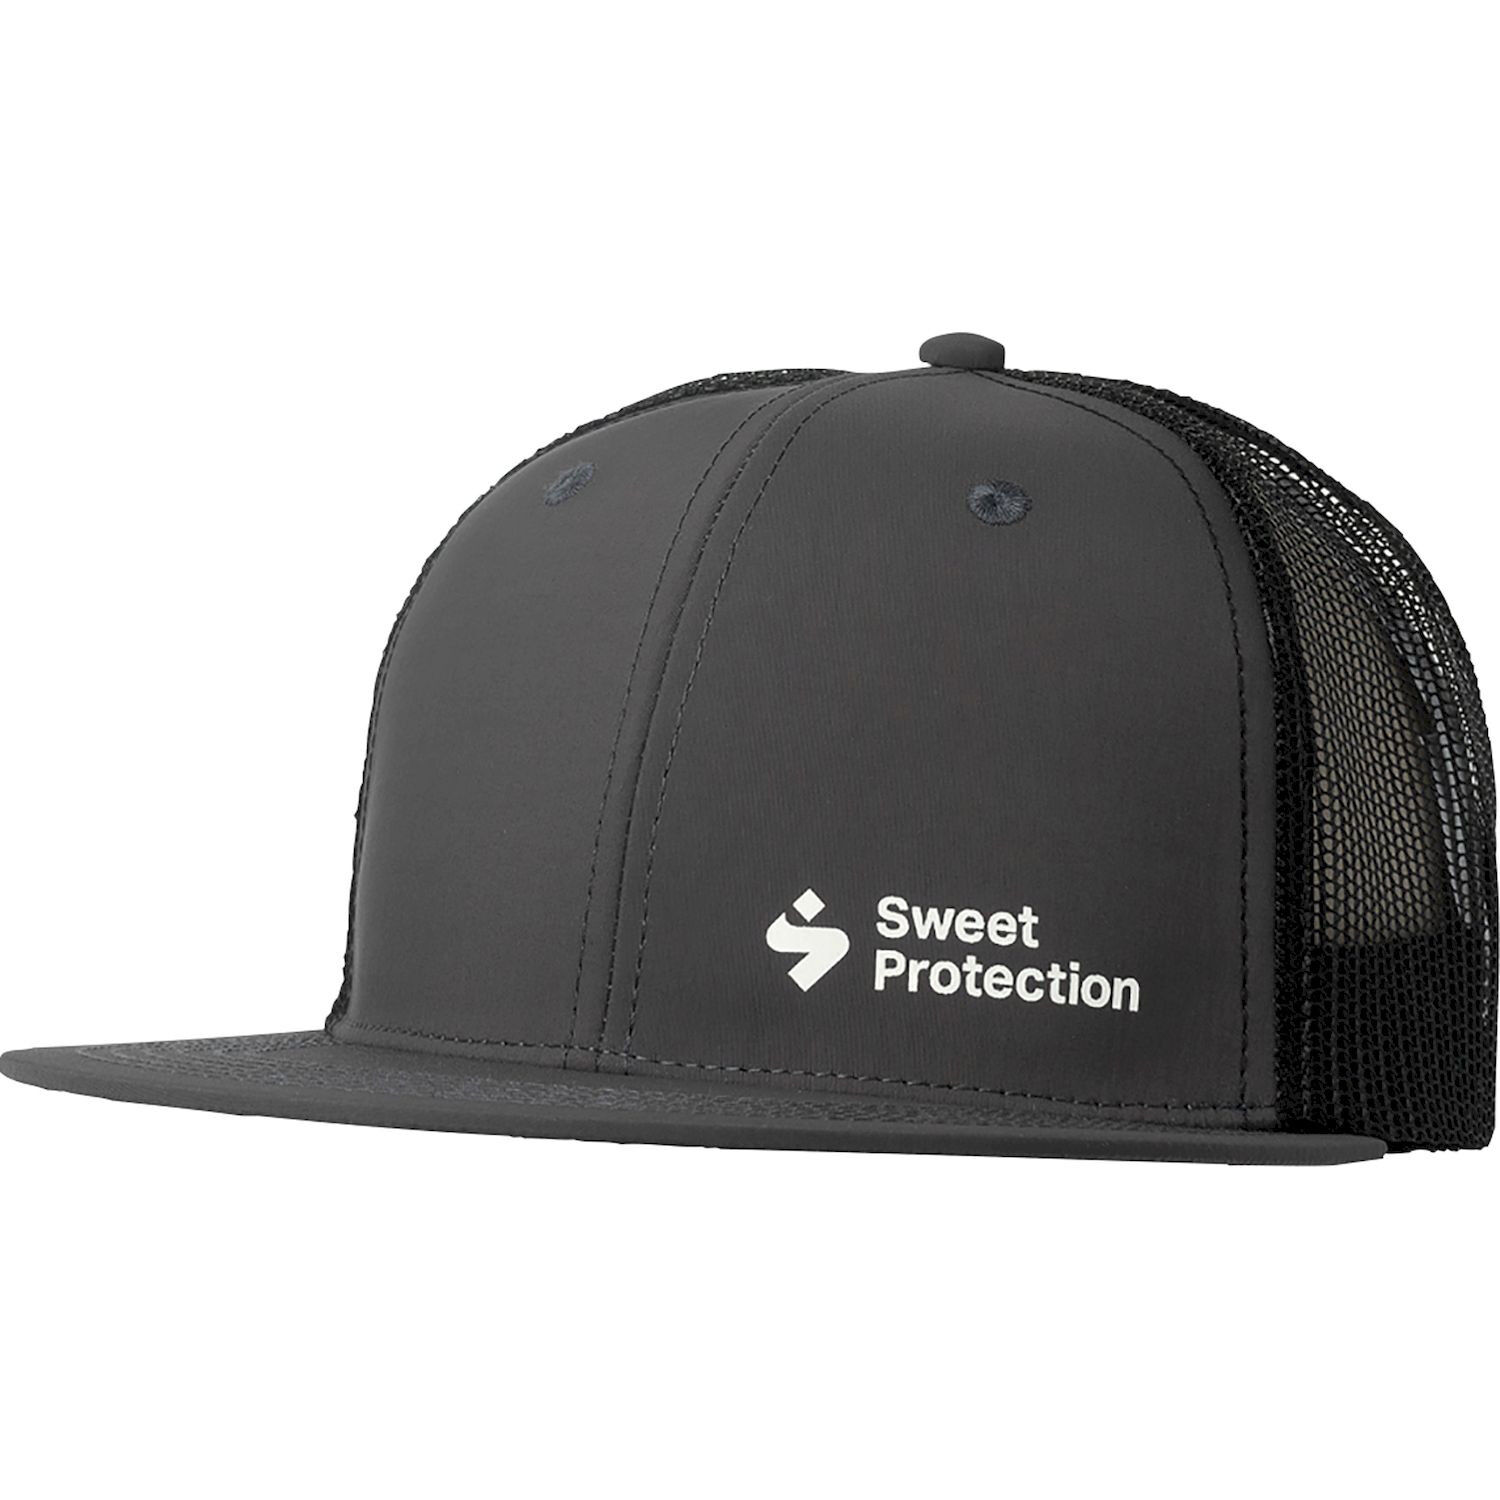 Sweet Protection Corporate Trucker Cap - Cappellino - Uomo